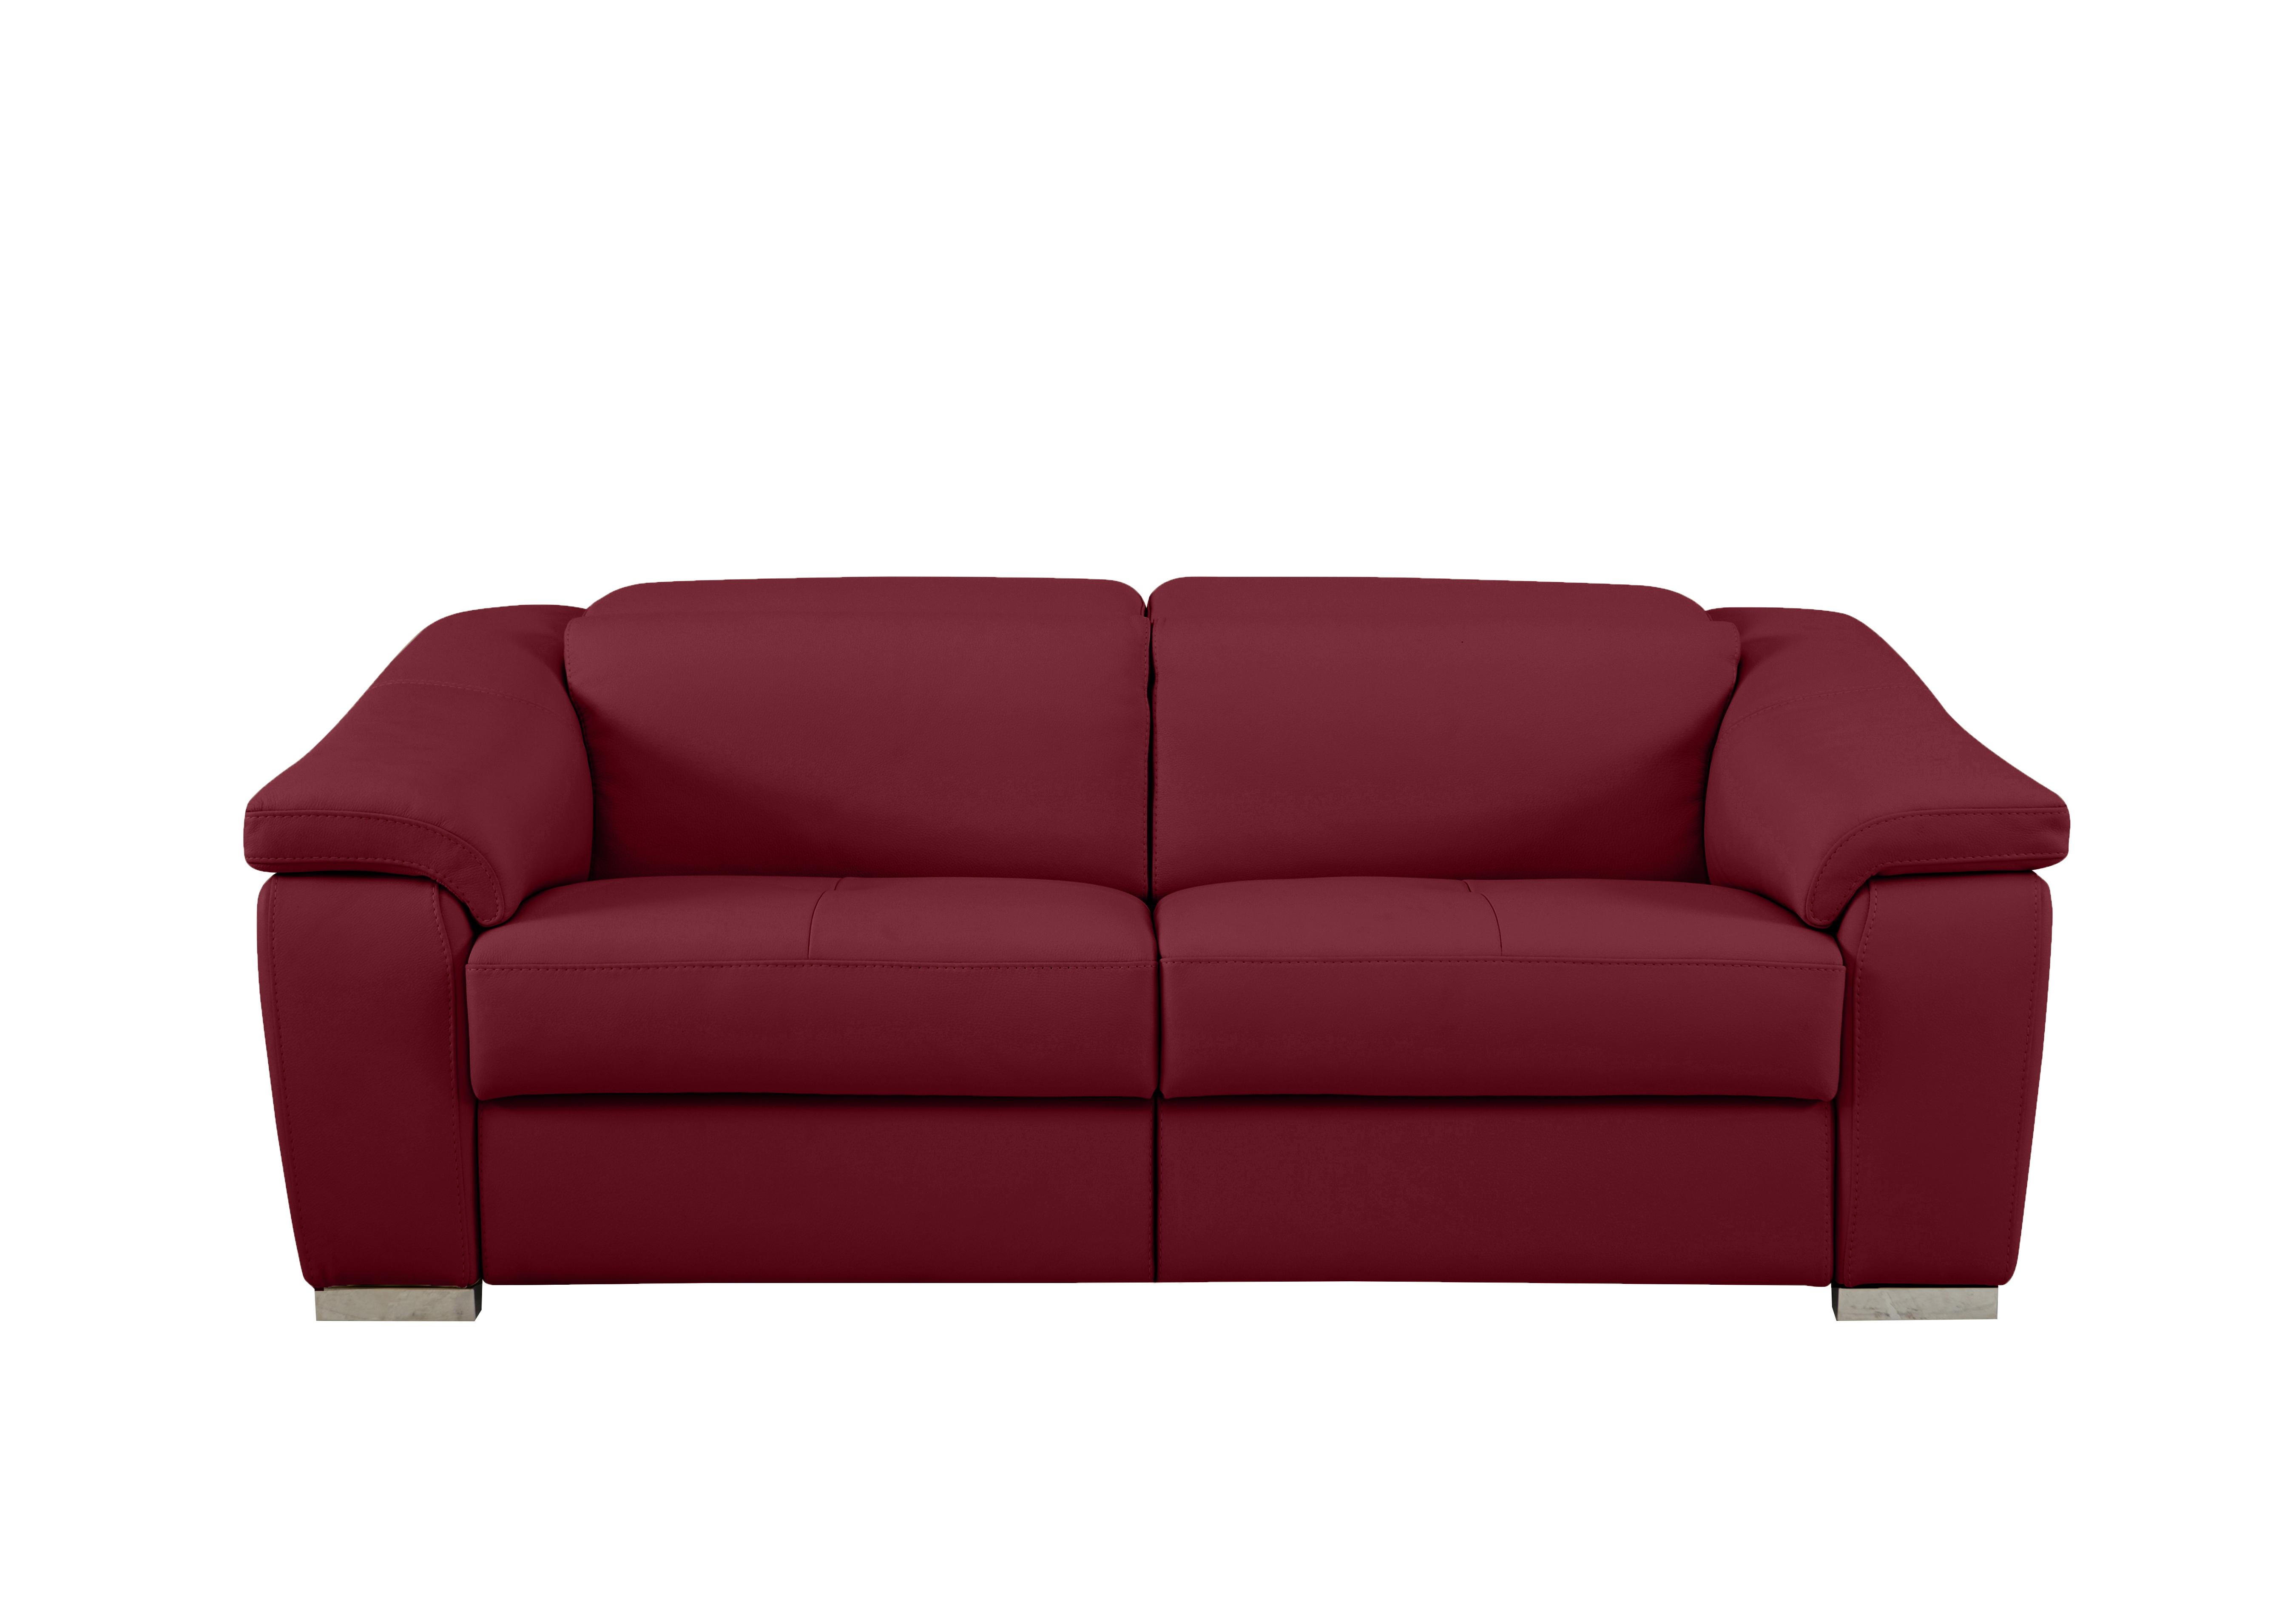 Galileo 3 Seater Leather Sofa in Dali Bordeaux 1521 Ch on Furniture Village